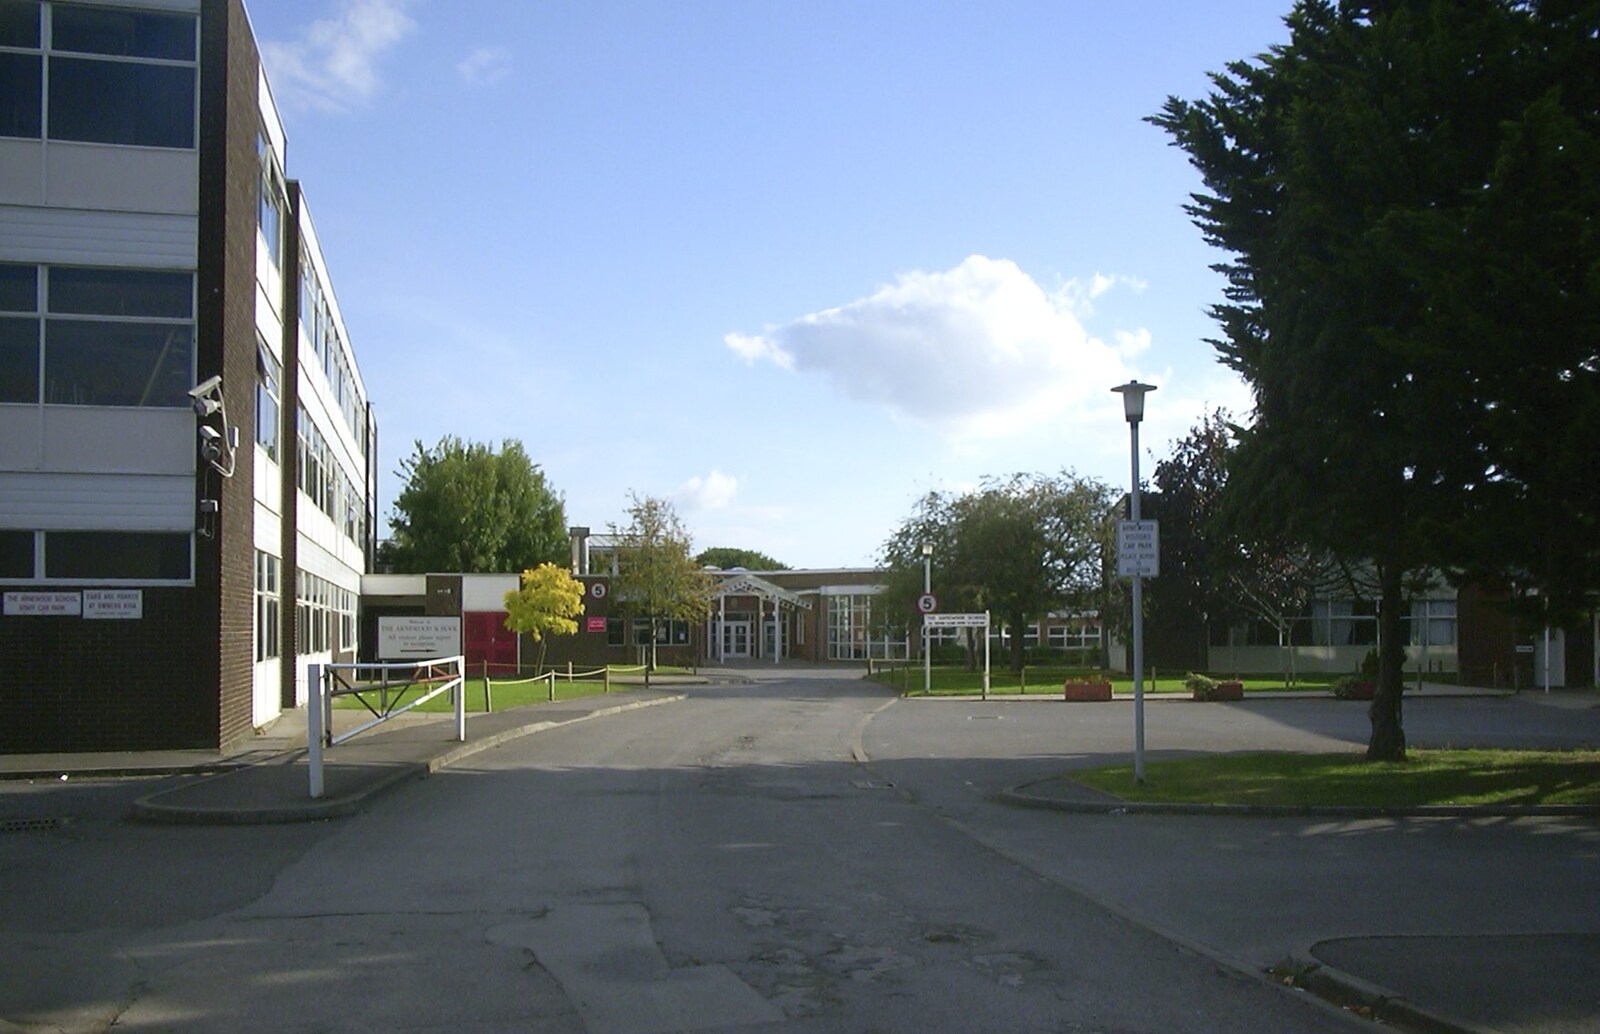 Arnewood School Class of '83 Reunion, Fawcett's Field, New Milton - 2nd November 2002: The main entrance to Arnewood School